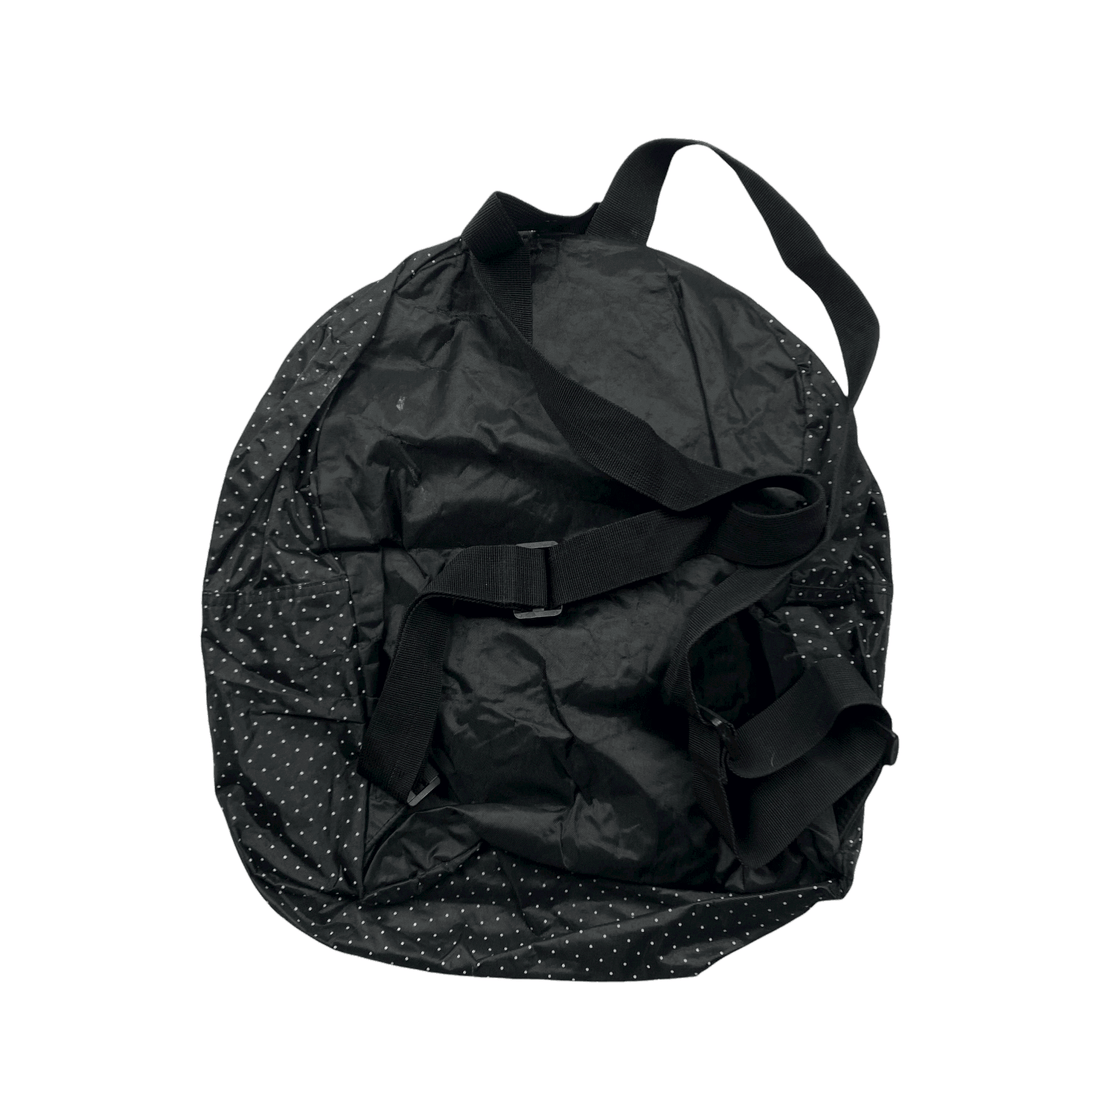 Vintage Black A Bathing Ape (BAPE) x Chocolate Backpack Bag - The Streetwear Studio